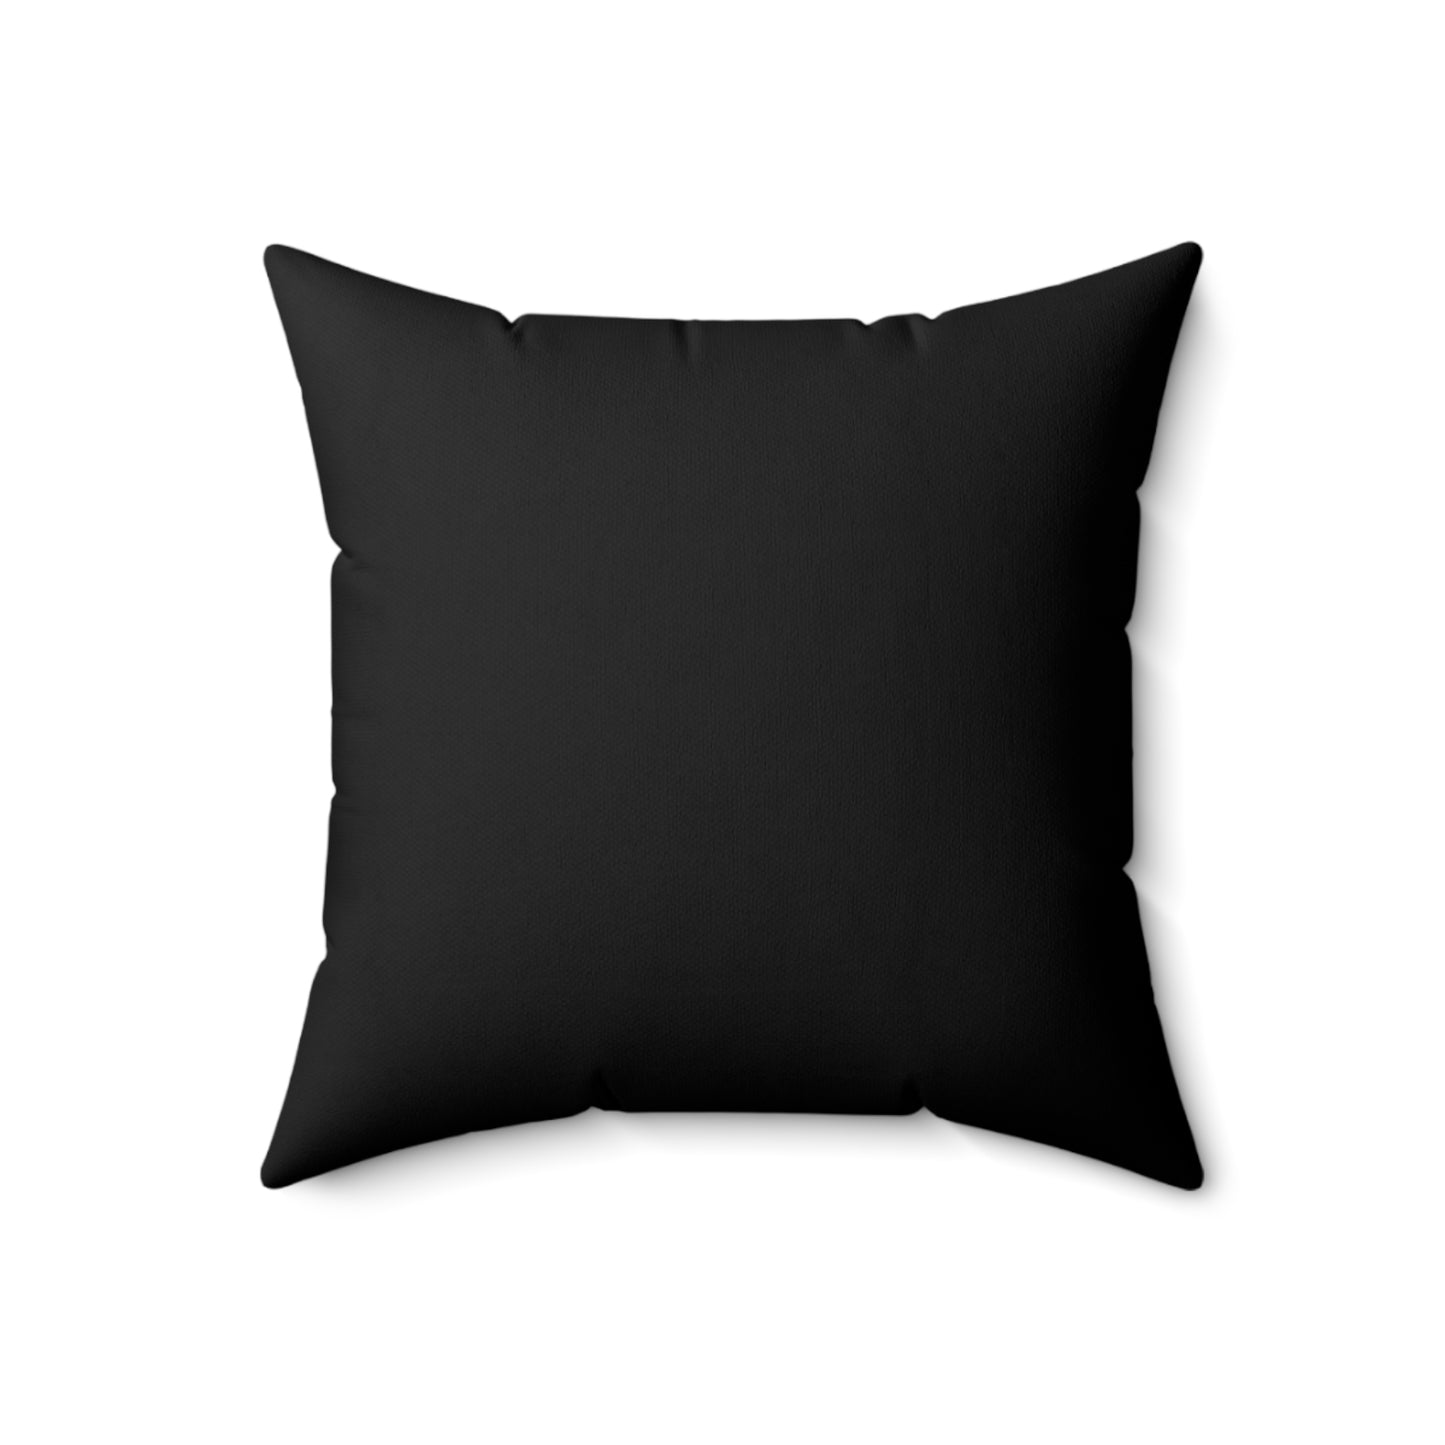 Made in Newark - Black Pillow